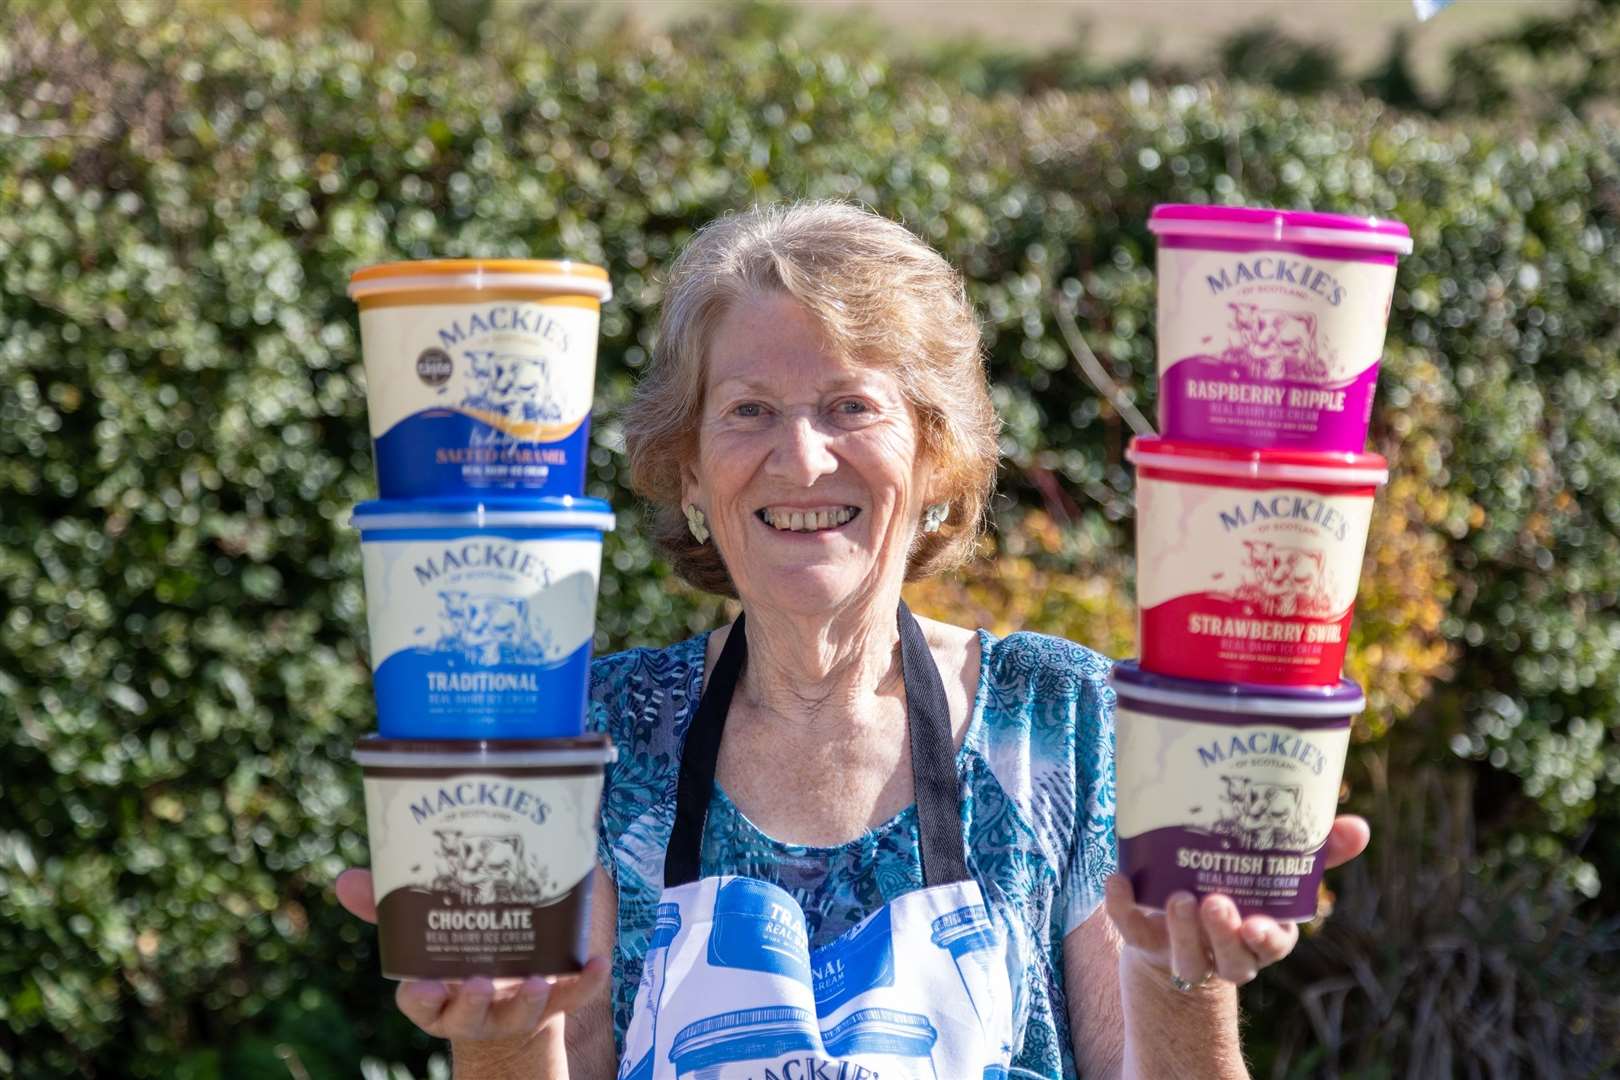 Margaret Ptiman says she will share the ice cream withe her grandchildren.